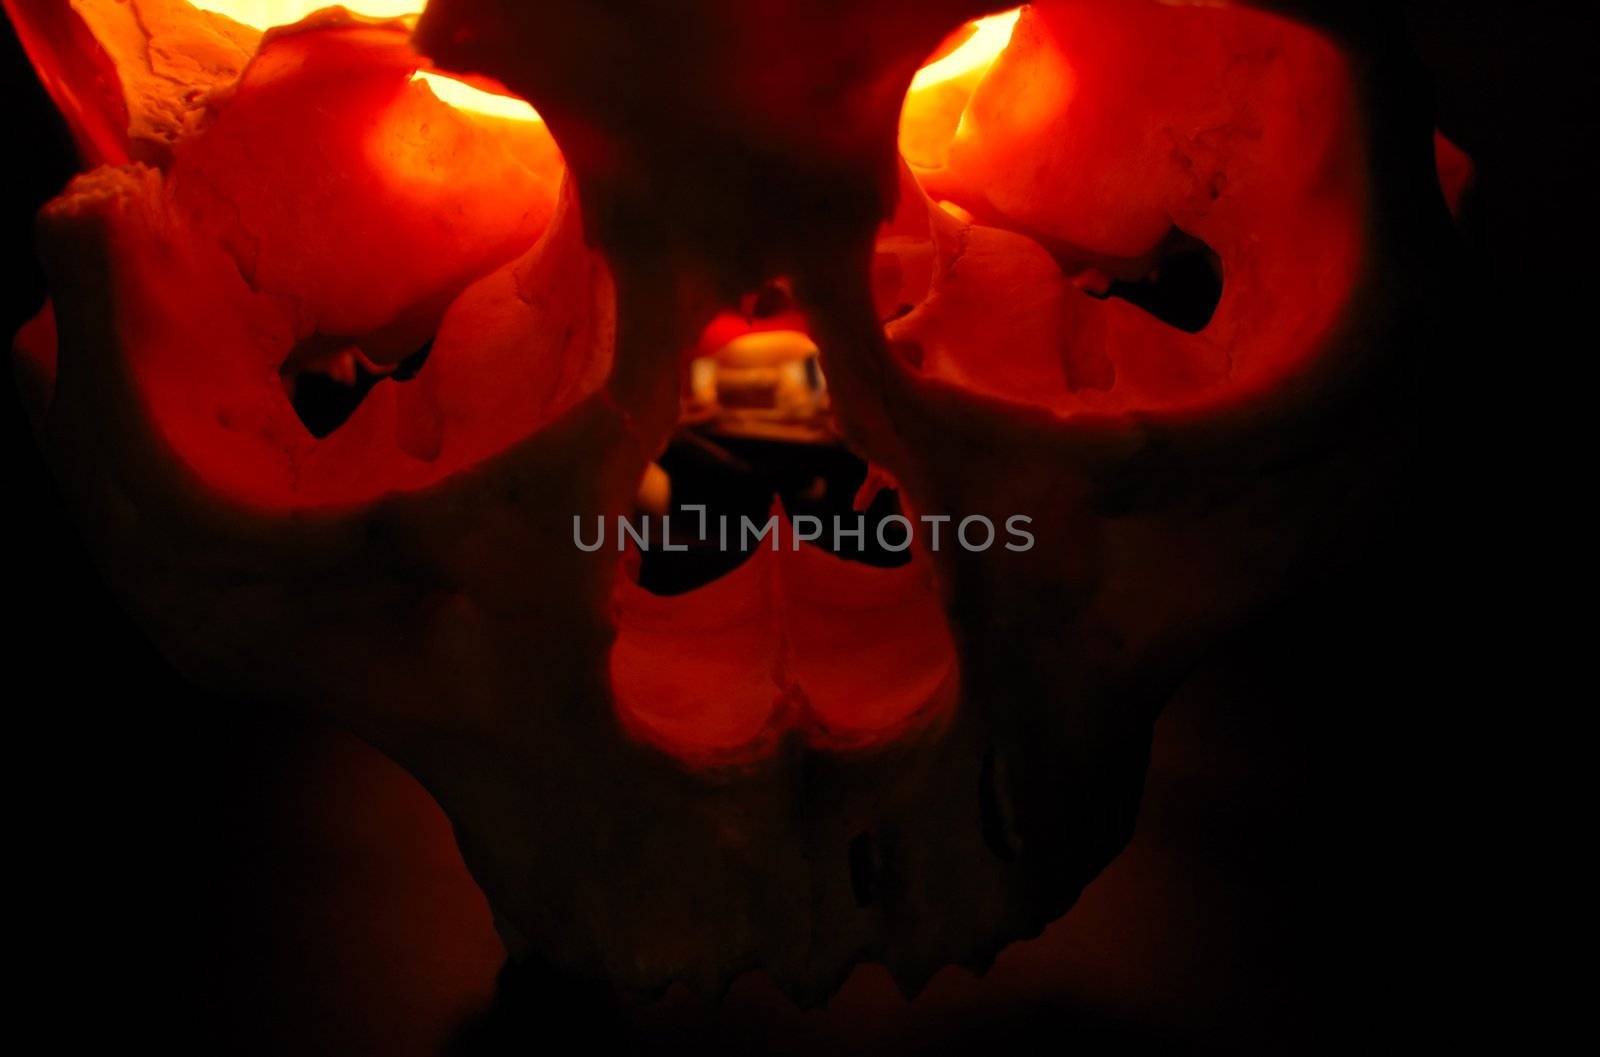 Front of burning skull - old skull against black background with inner flame